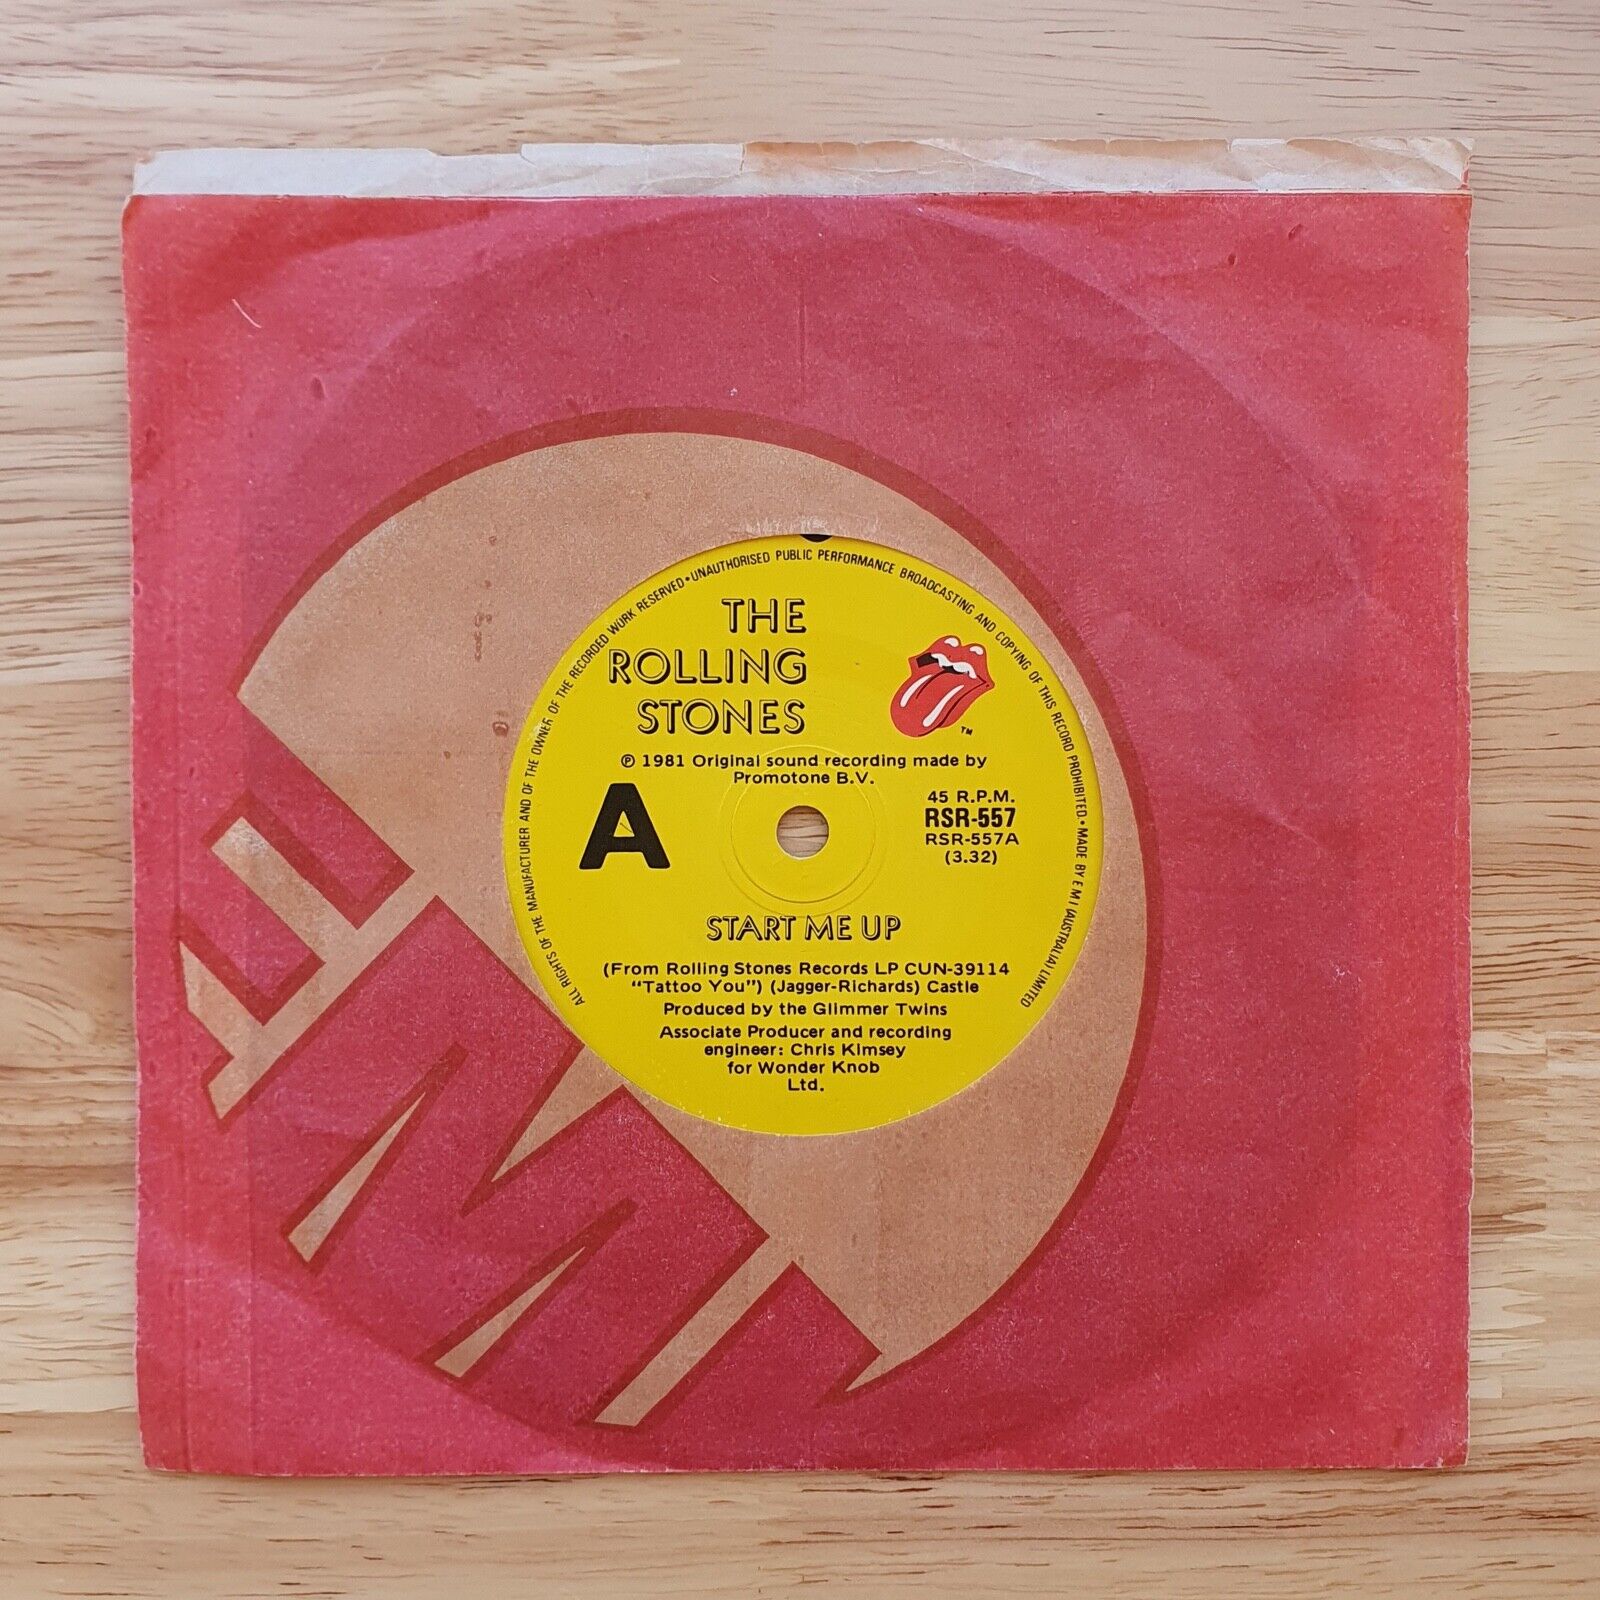 THE ROLLING STONES - Start Me Up 7" Vinyl Single (Australian Pressing) 1981